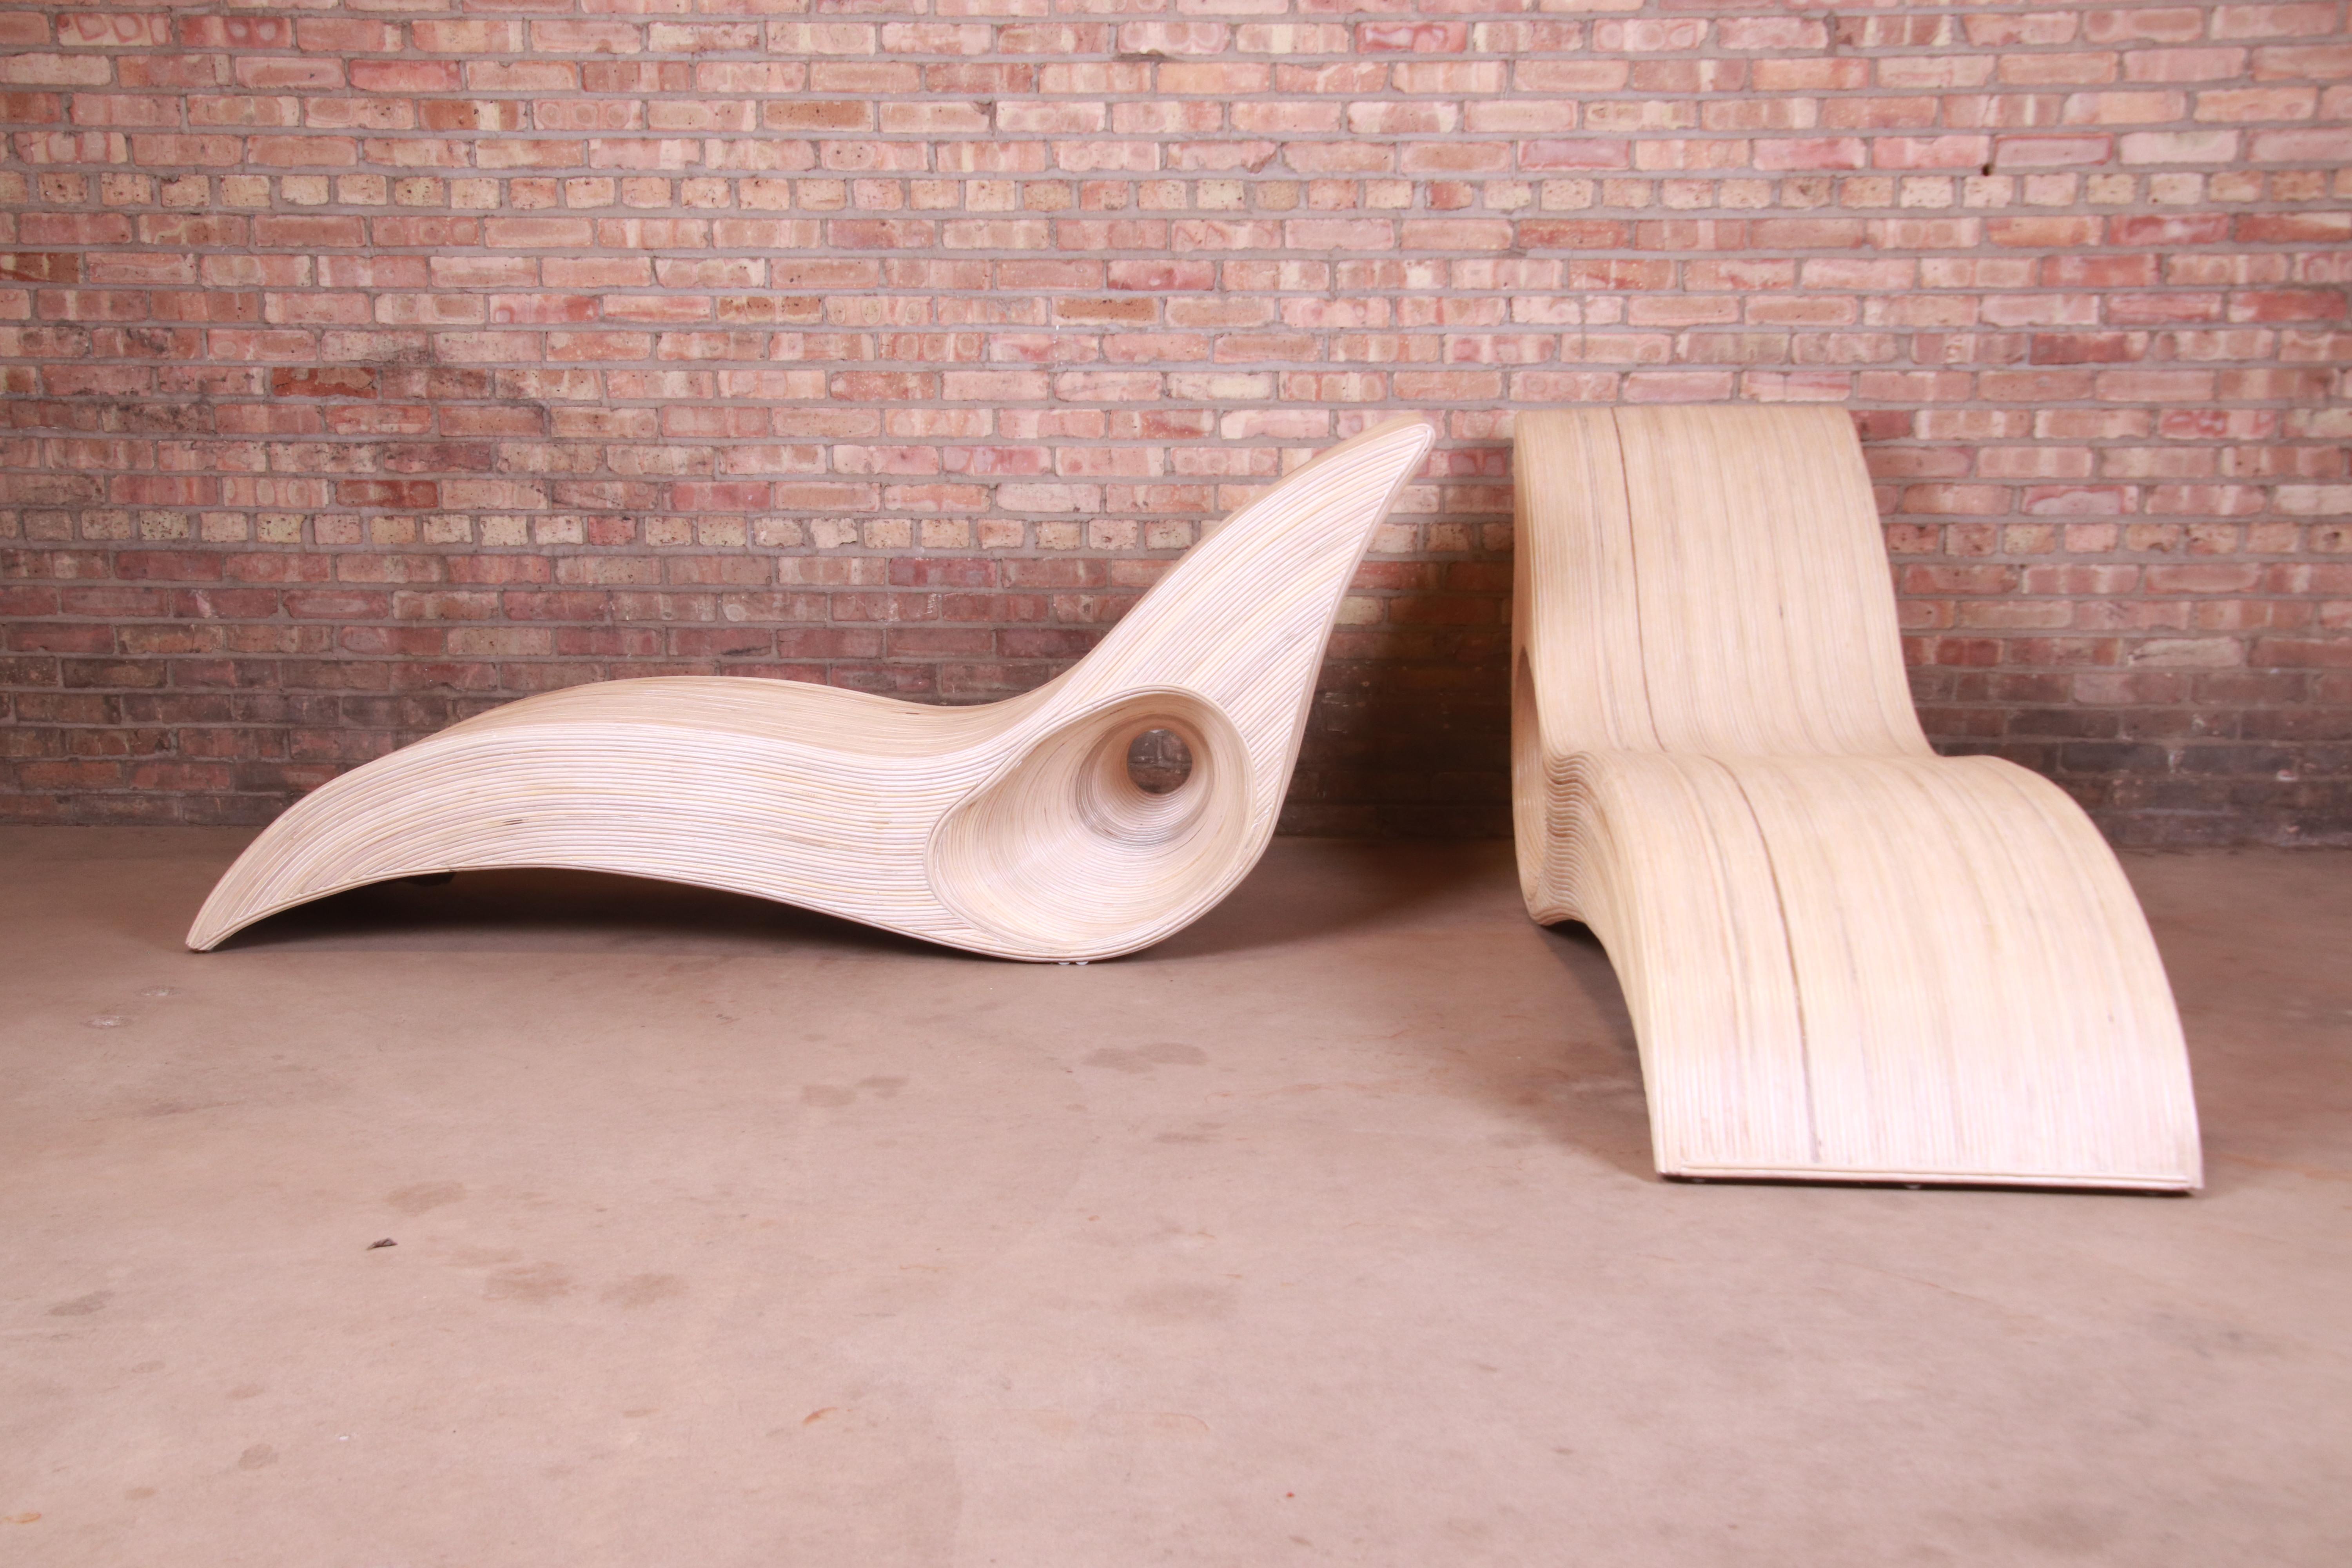 Betty Cobonpue Sculptural Split Reed Rattan Chaise Lounges, Pair For Sale 2